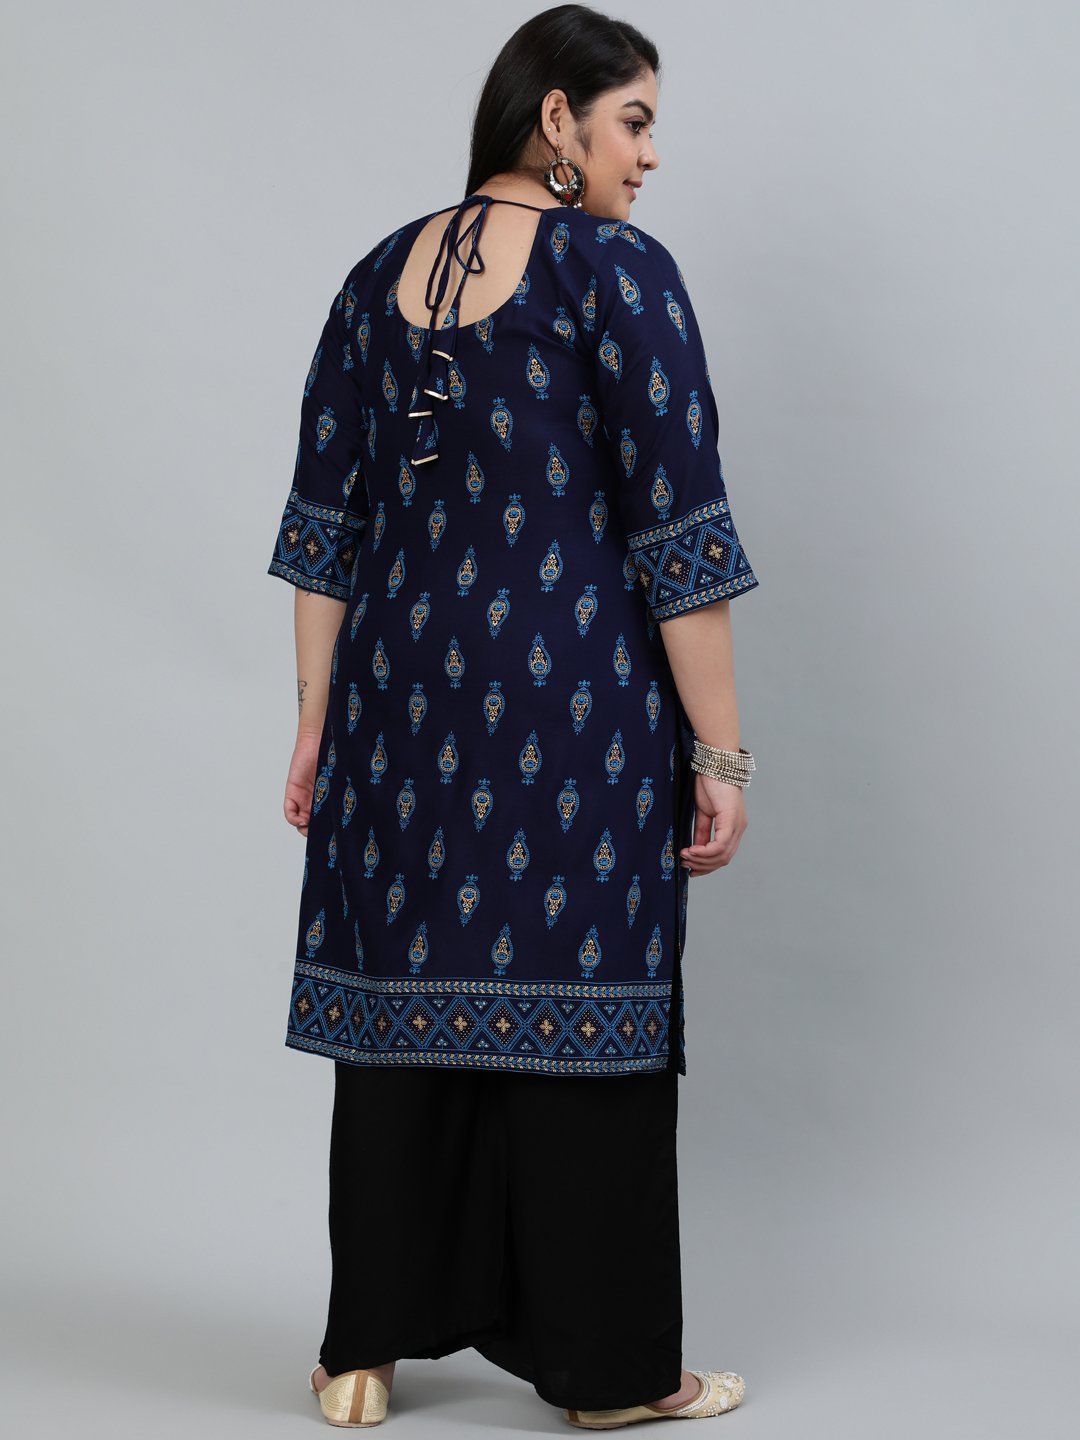 Women's Plus Size Navy Blue & Gold Printed Staright Kurta With Three Quarter Sleeves - Nayo Clothing